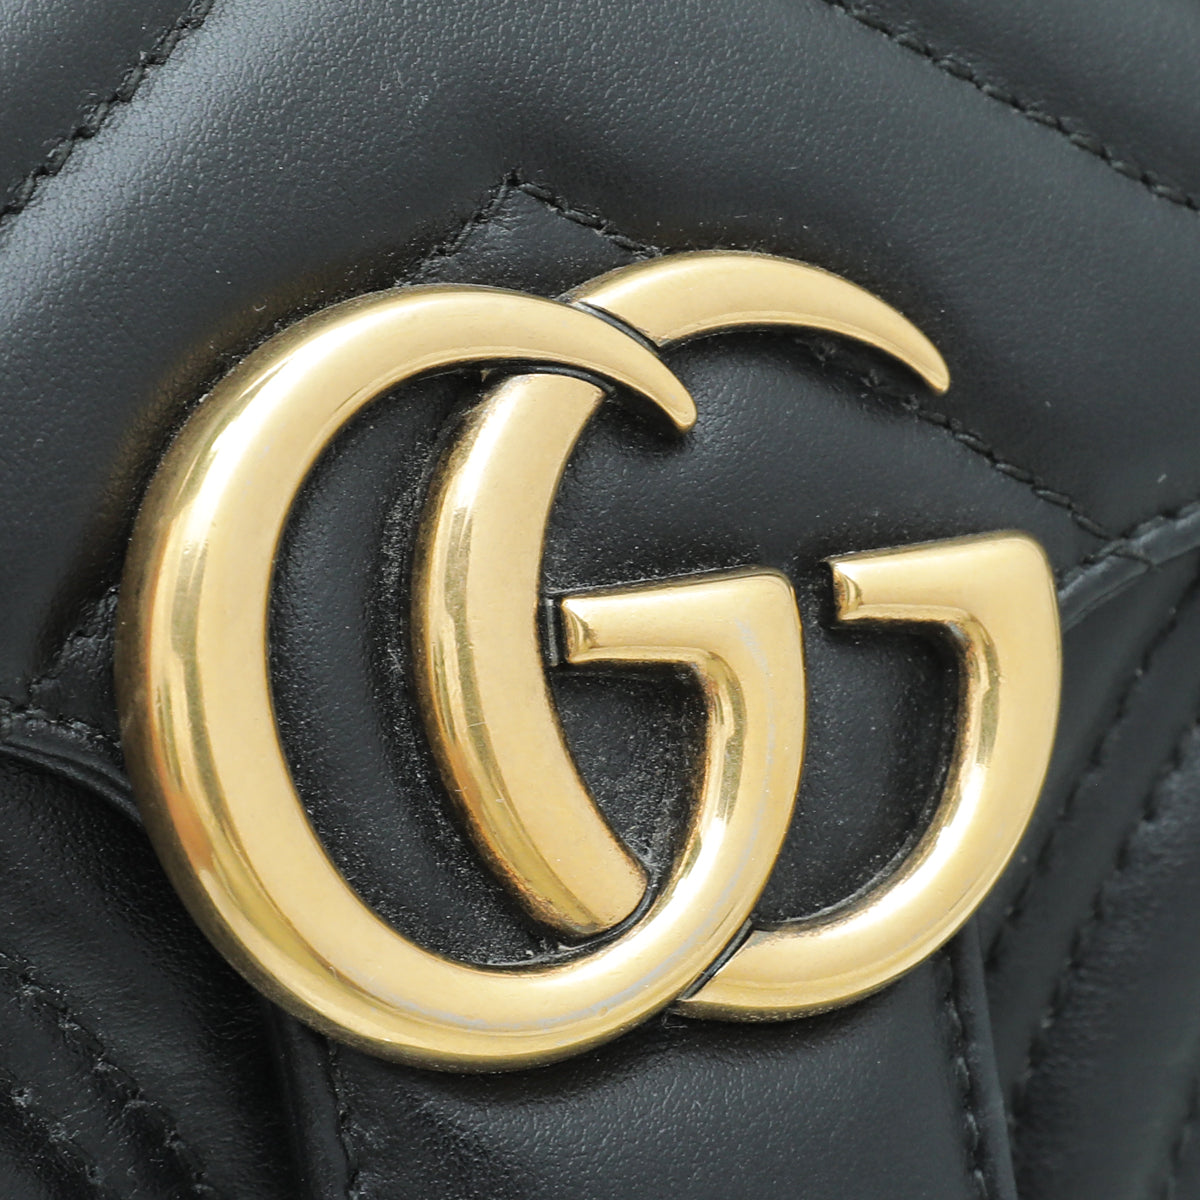 Gucci Black Velvet GG Marmont Mini Belt Bag – The Closet